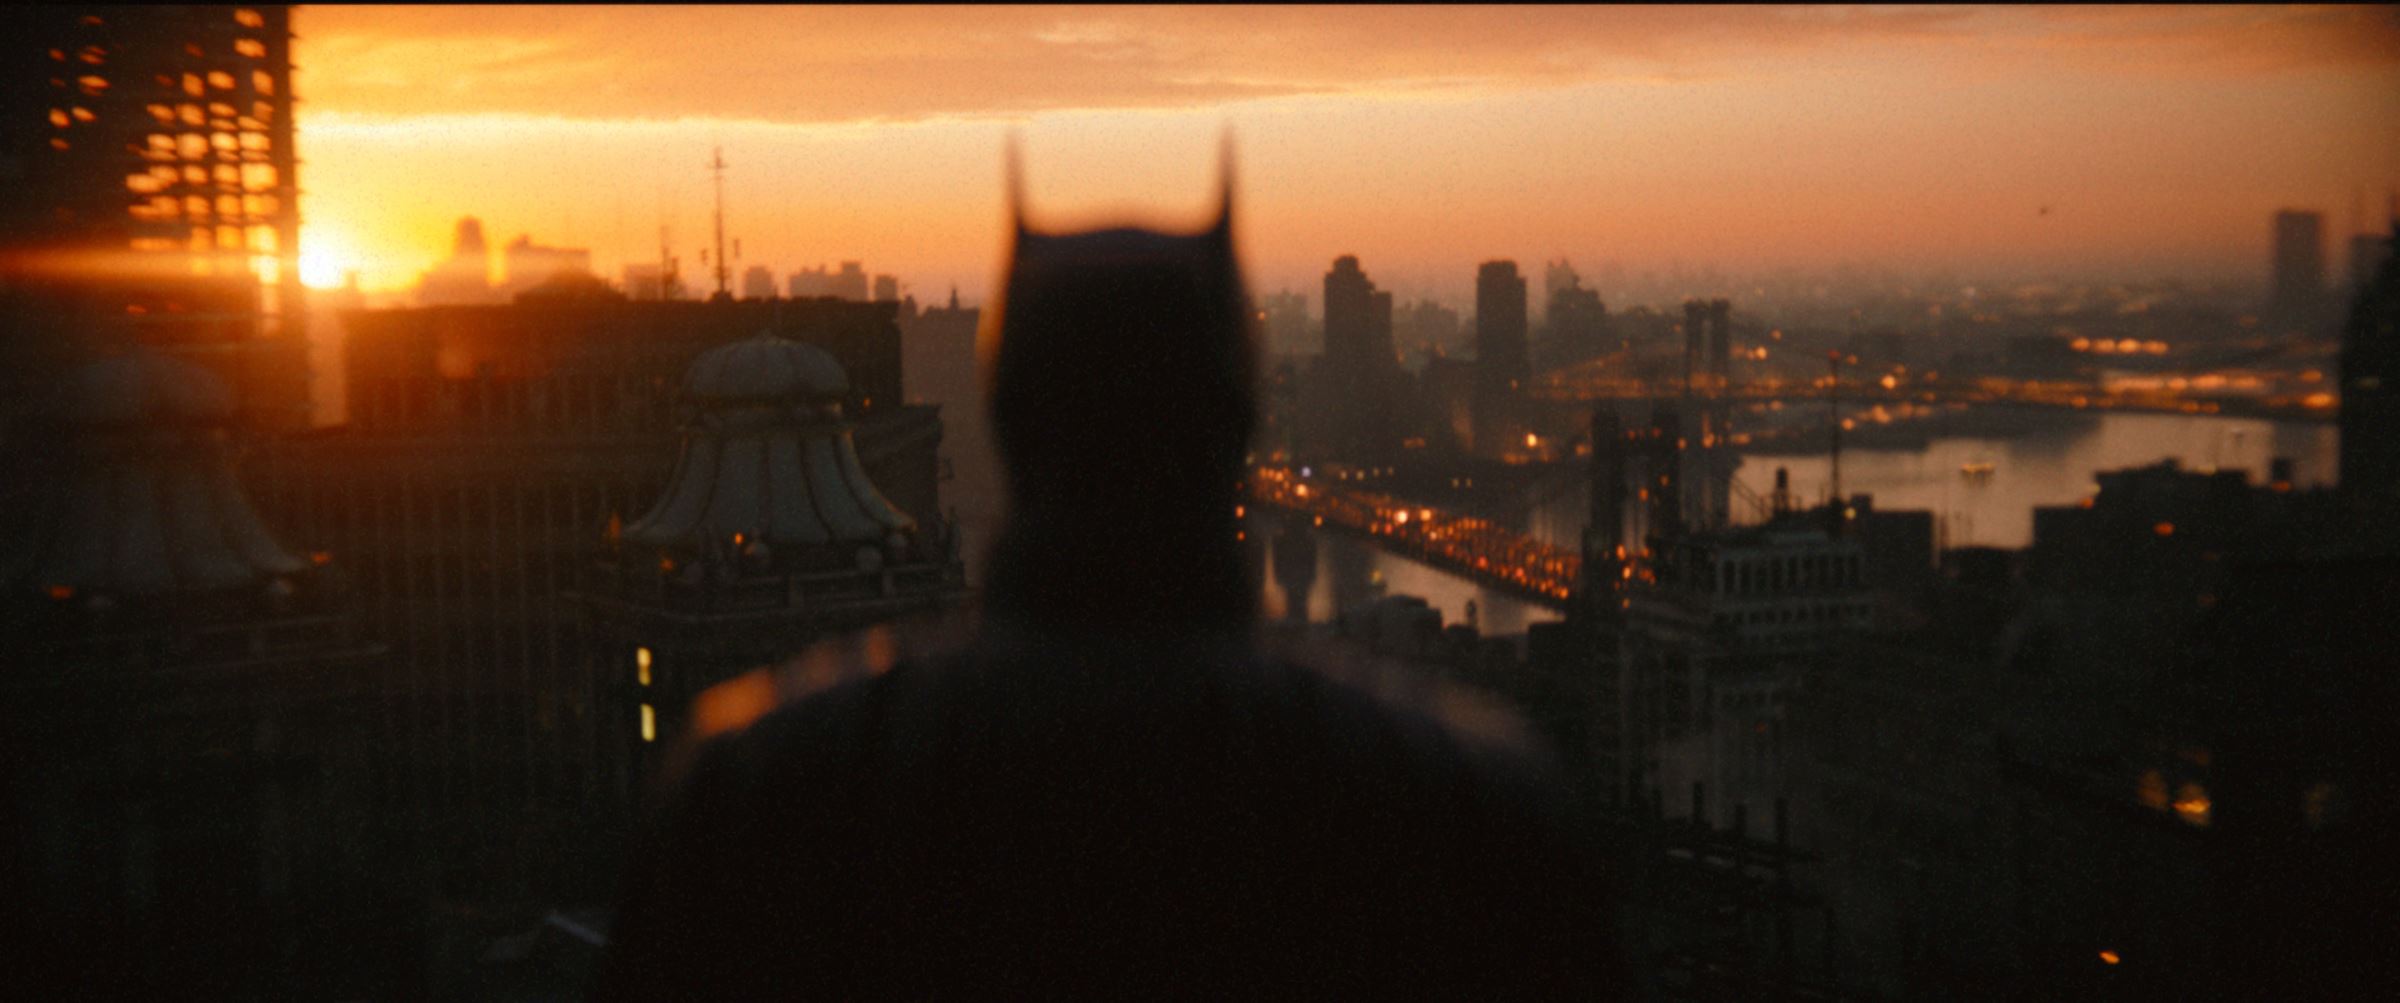 『THE BATMAN-ザ・バットマン-』 (c)2020 Warner Bros. Entertainment Inc. All Rights Reserved.